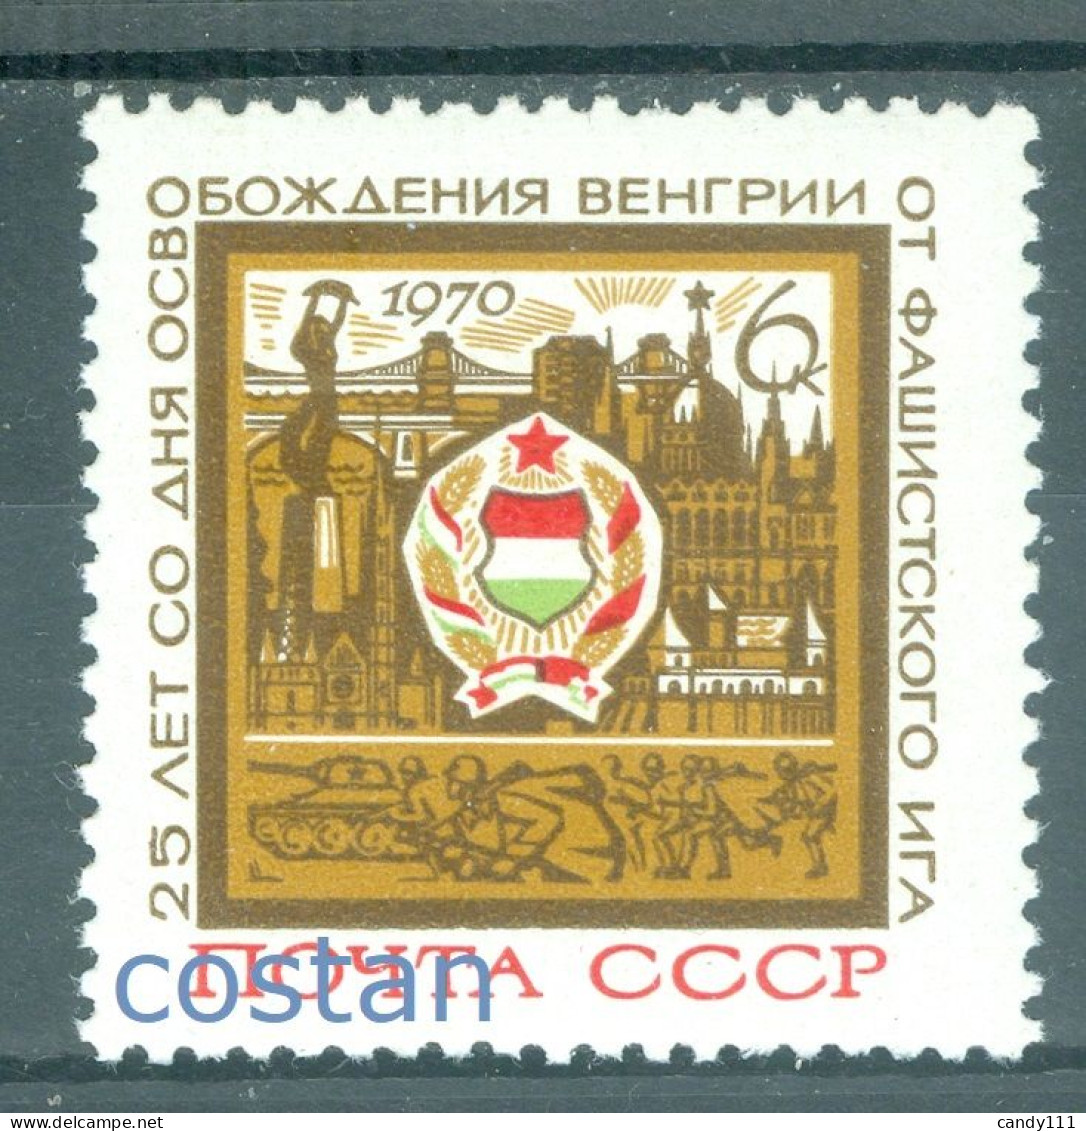 1970 Hungary Liberation,Coat Of Arms,tank,soldiers,Parliament,Russia,3747,MNH - Ongebruikt